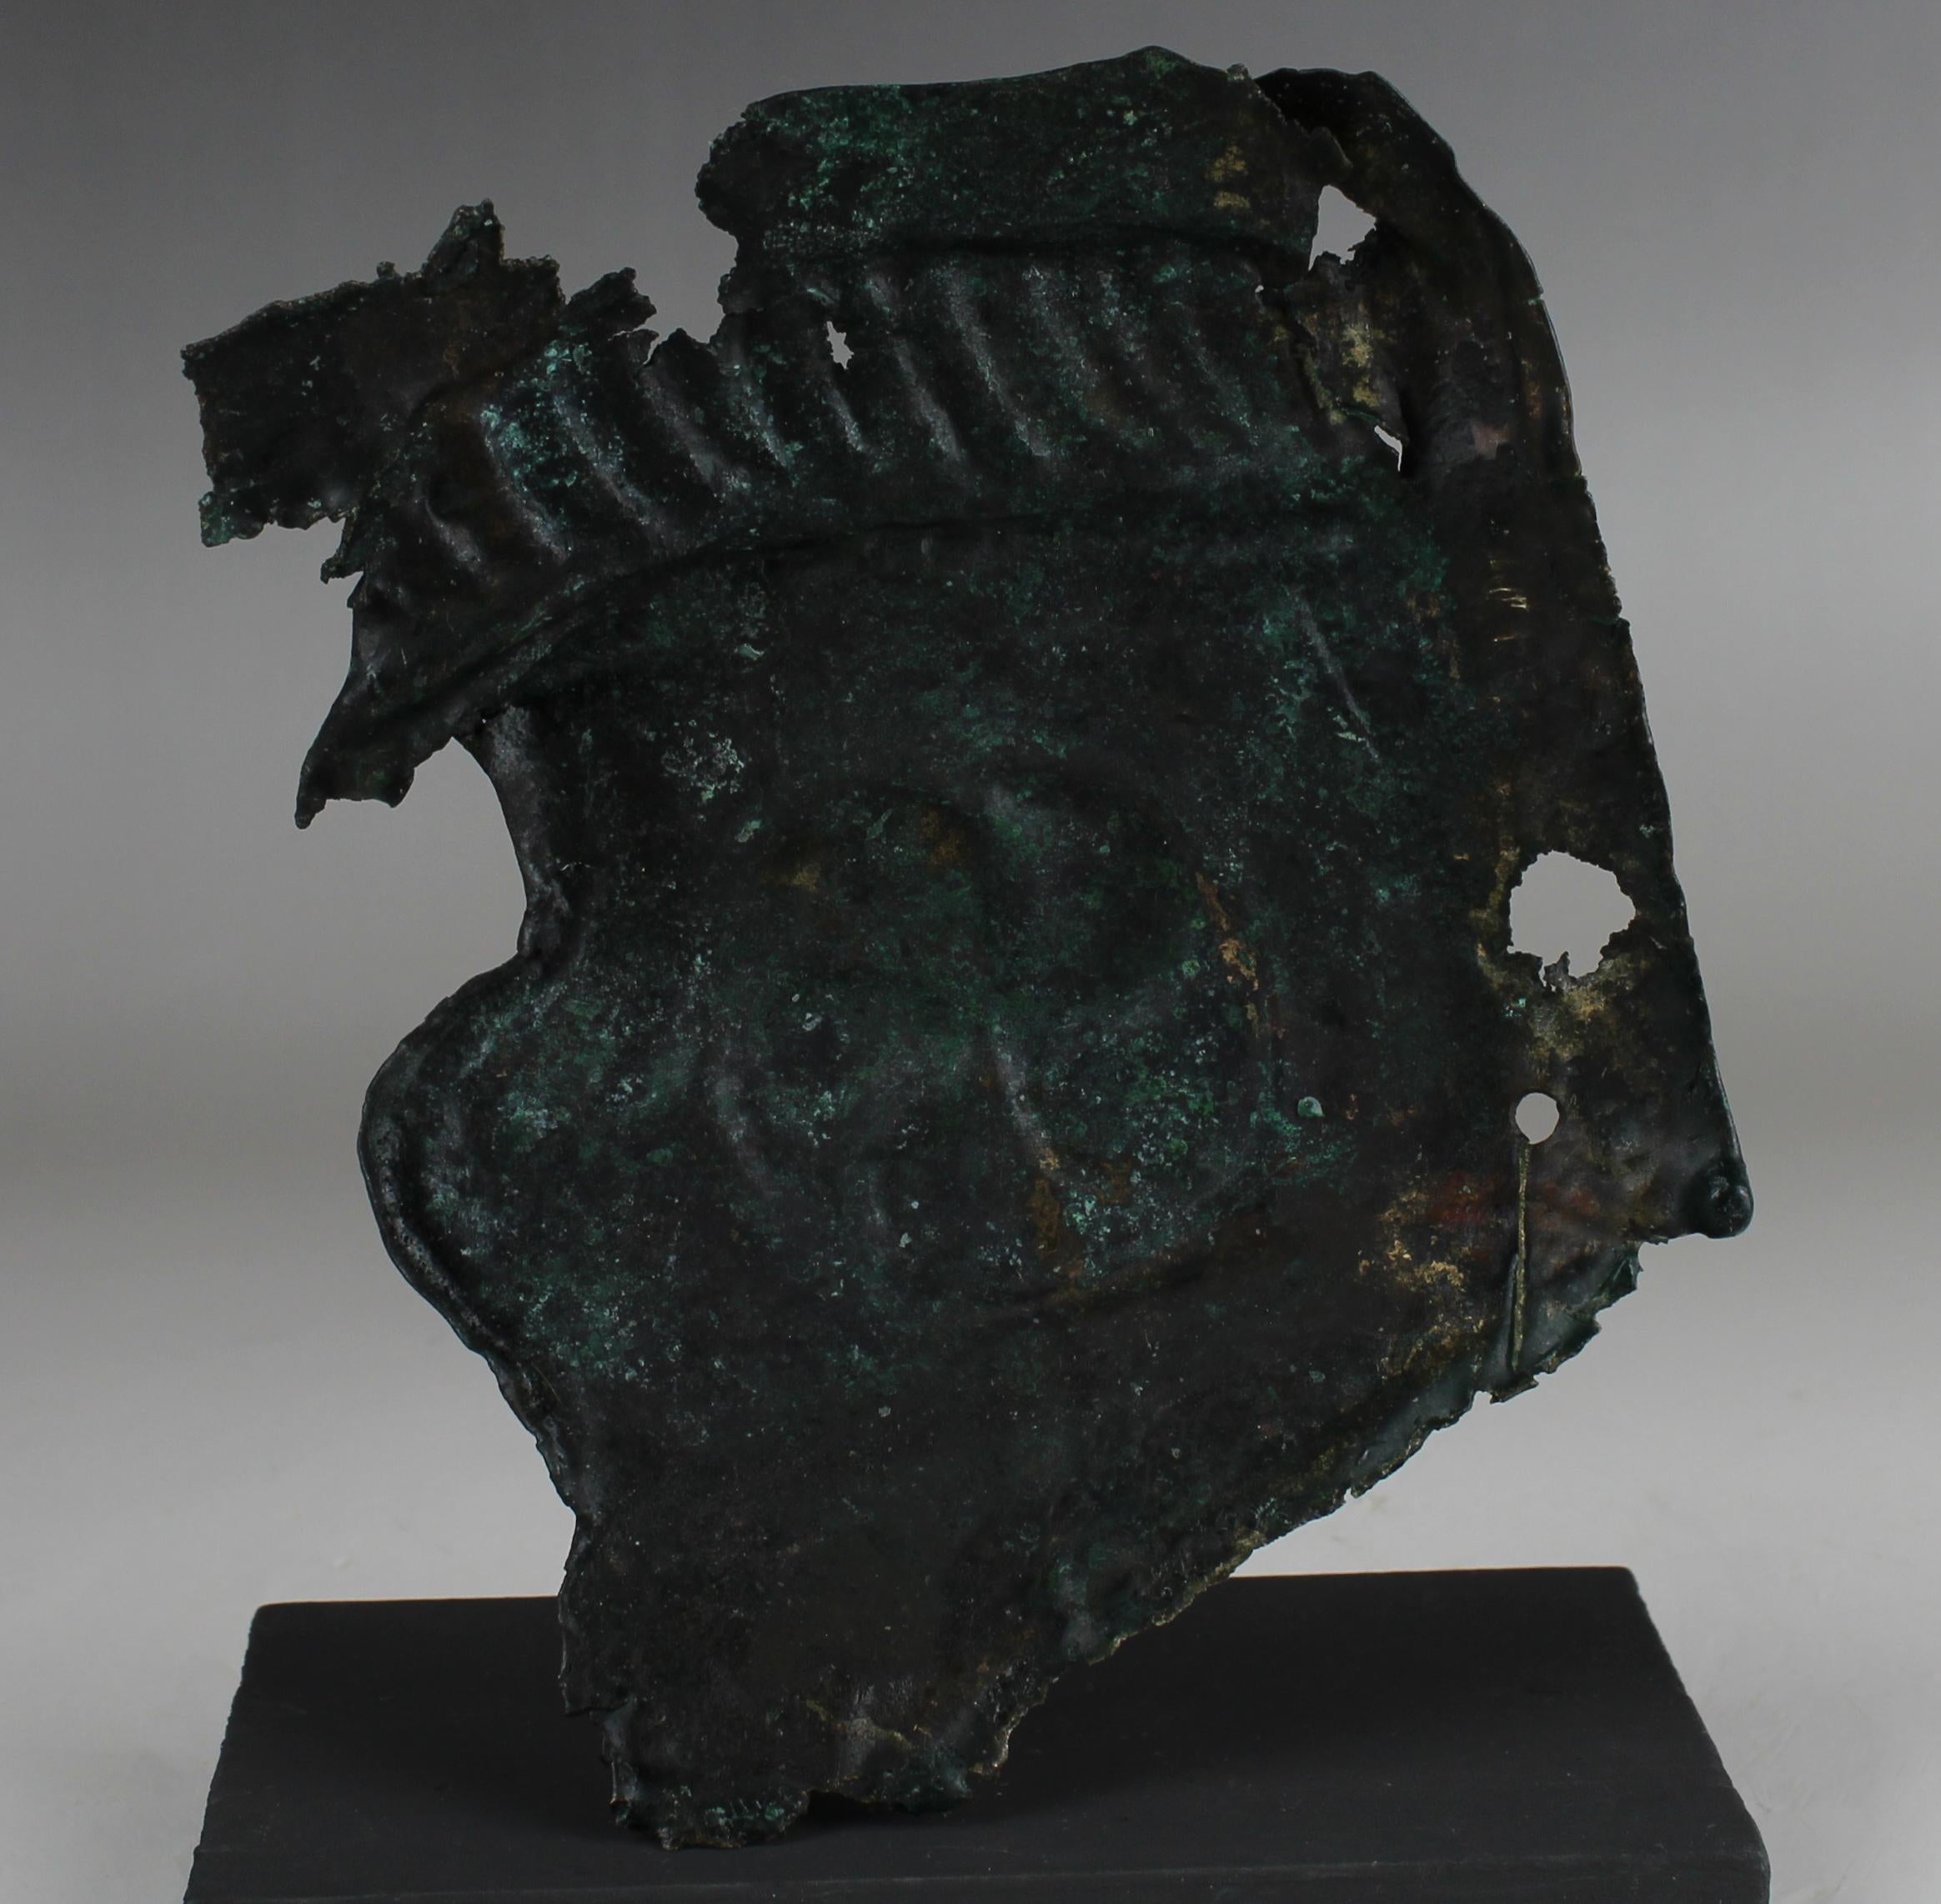 Italian Roman military cheek piece of a helmet fragment with shield ornament